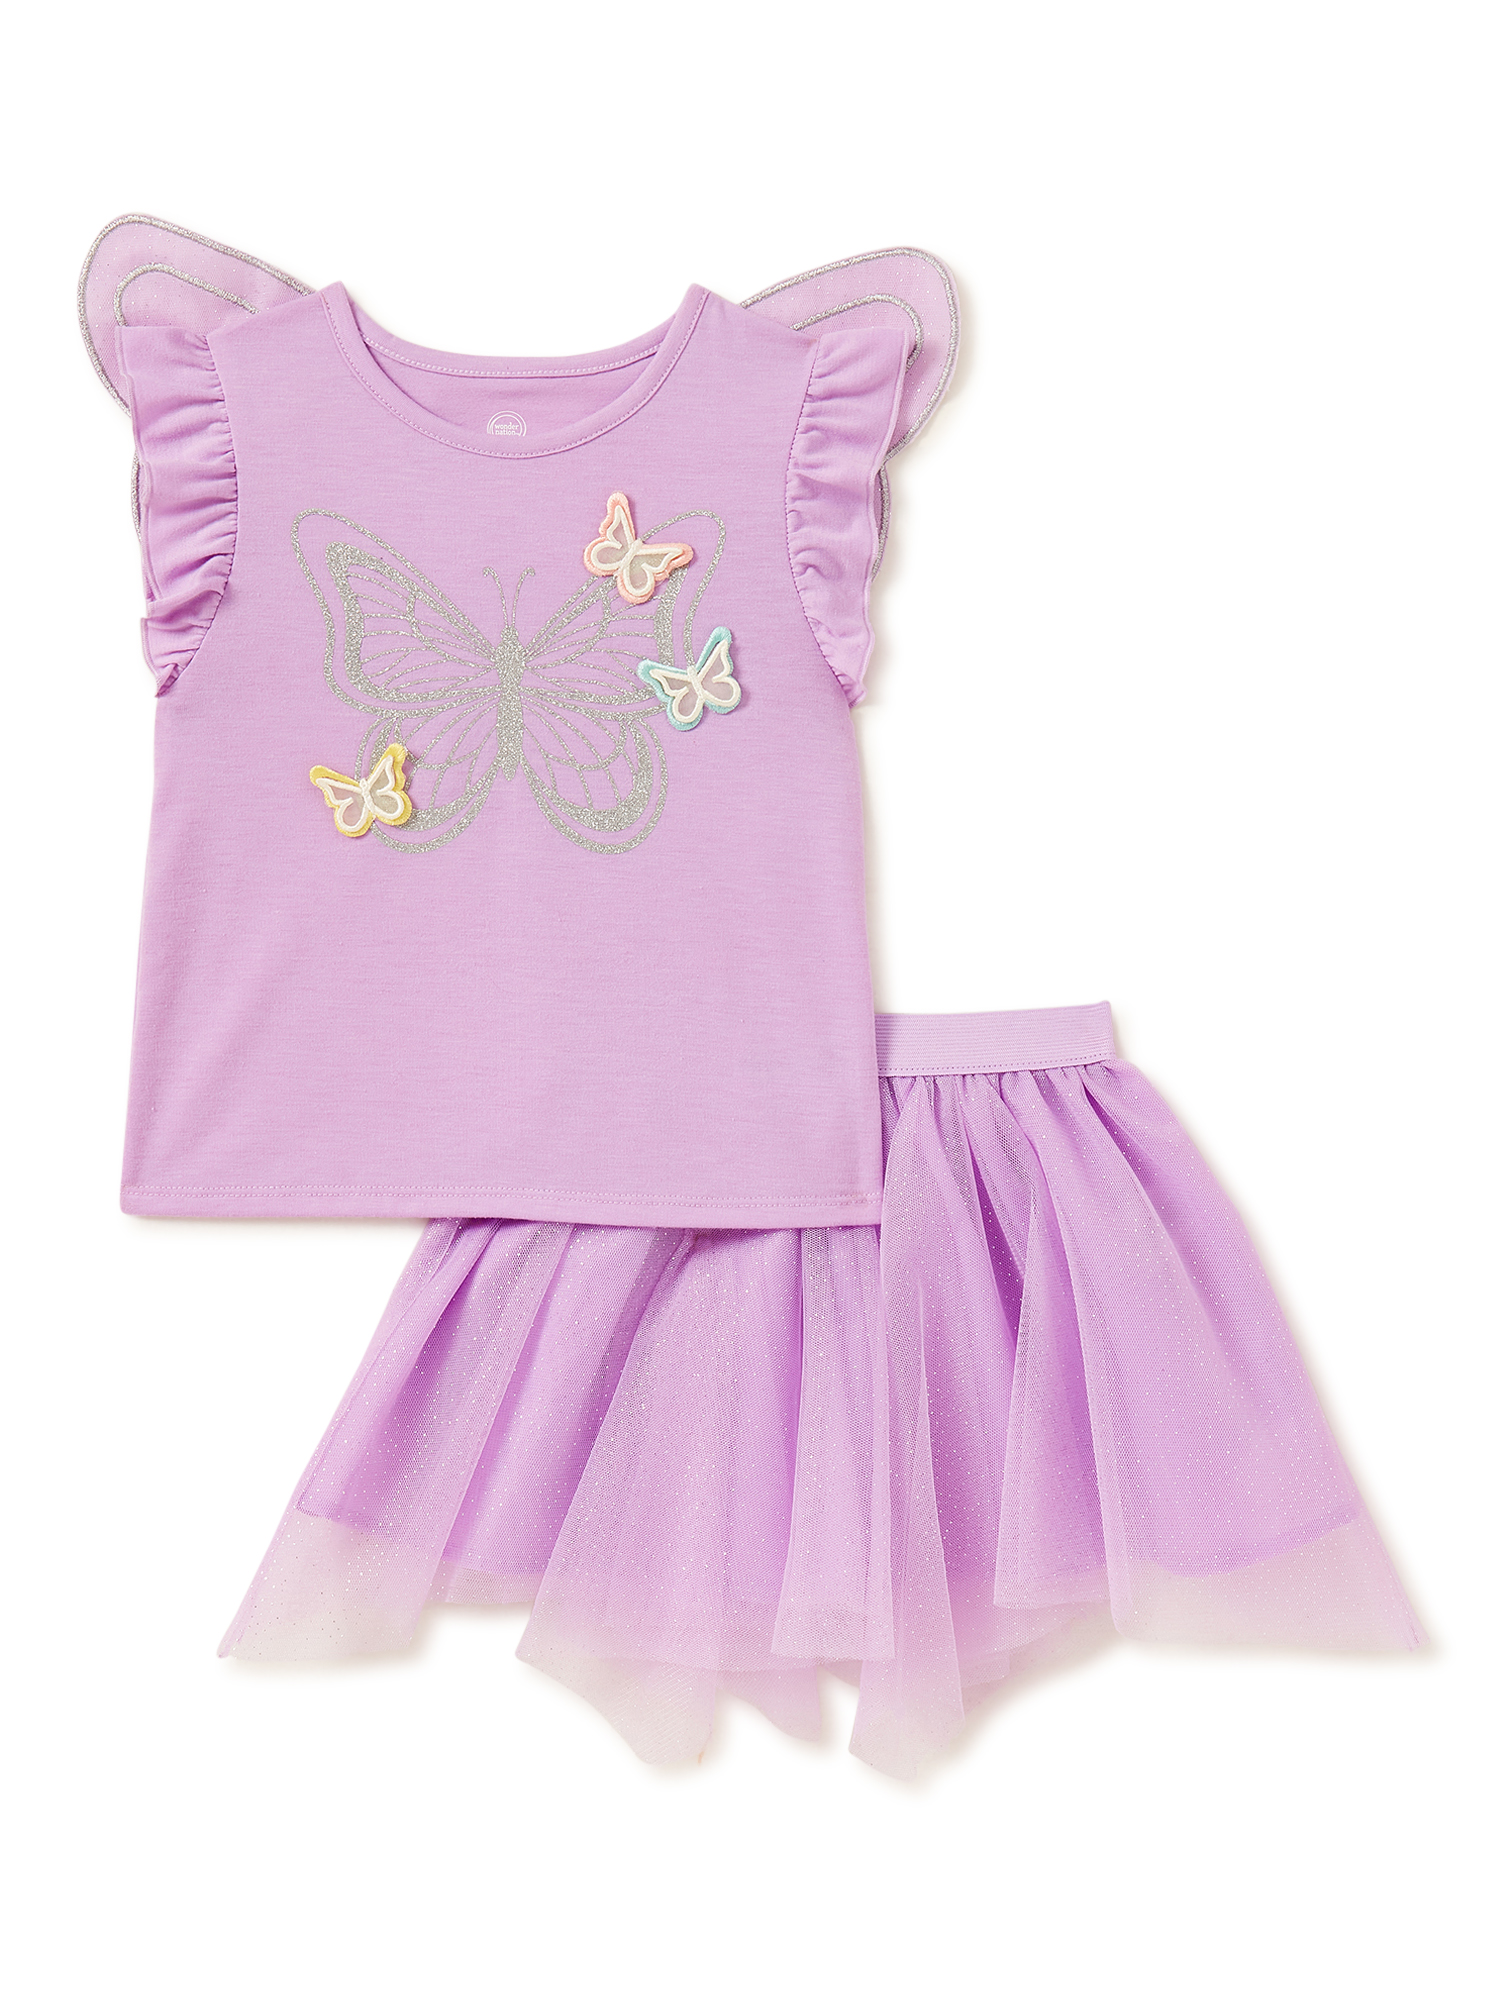 Wonder Nation Baby & Toddler Girls Dress-Up Flutter Sleeve Top, Tutu Skirt & Accessory, 3-Piece Set, Sizes 12M-5T - image 1 of 3